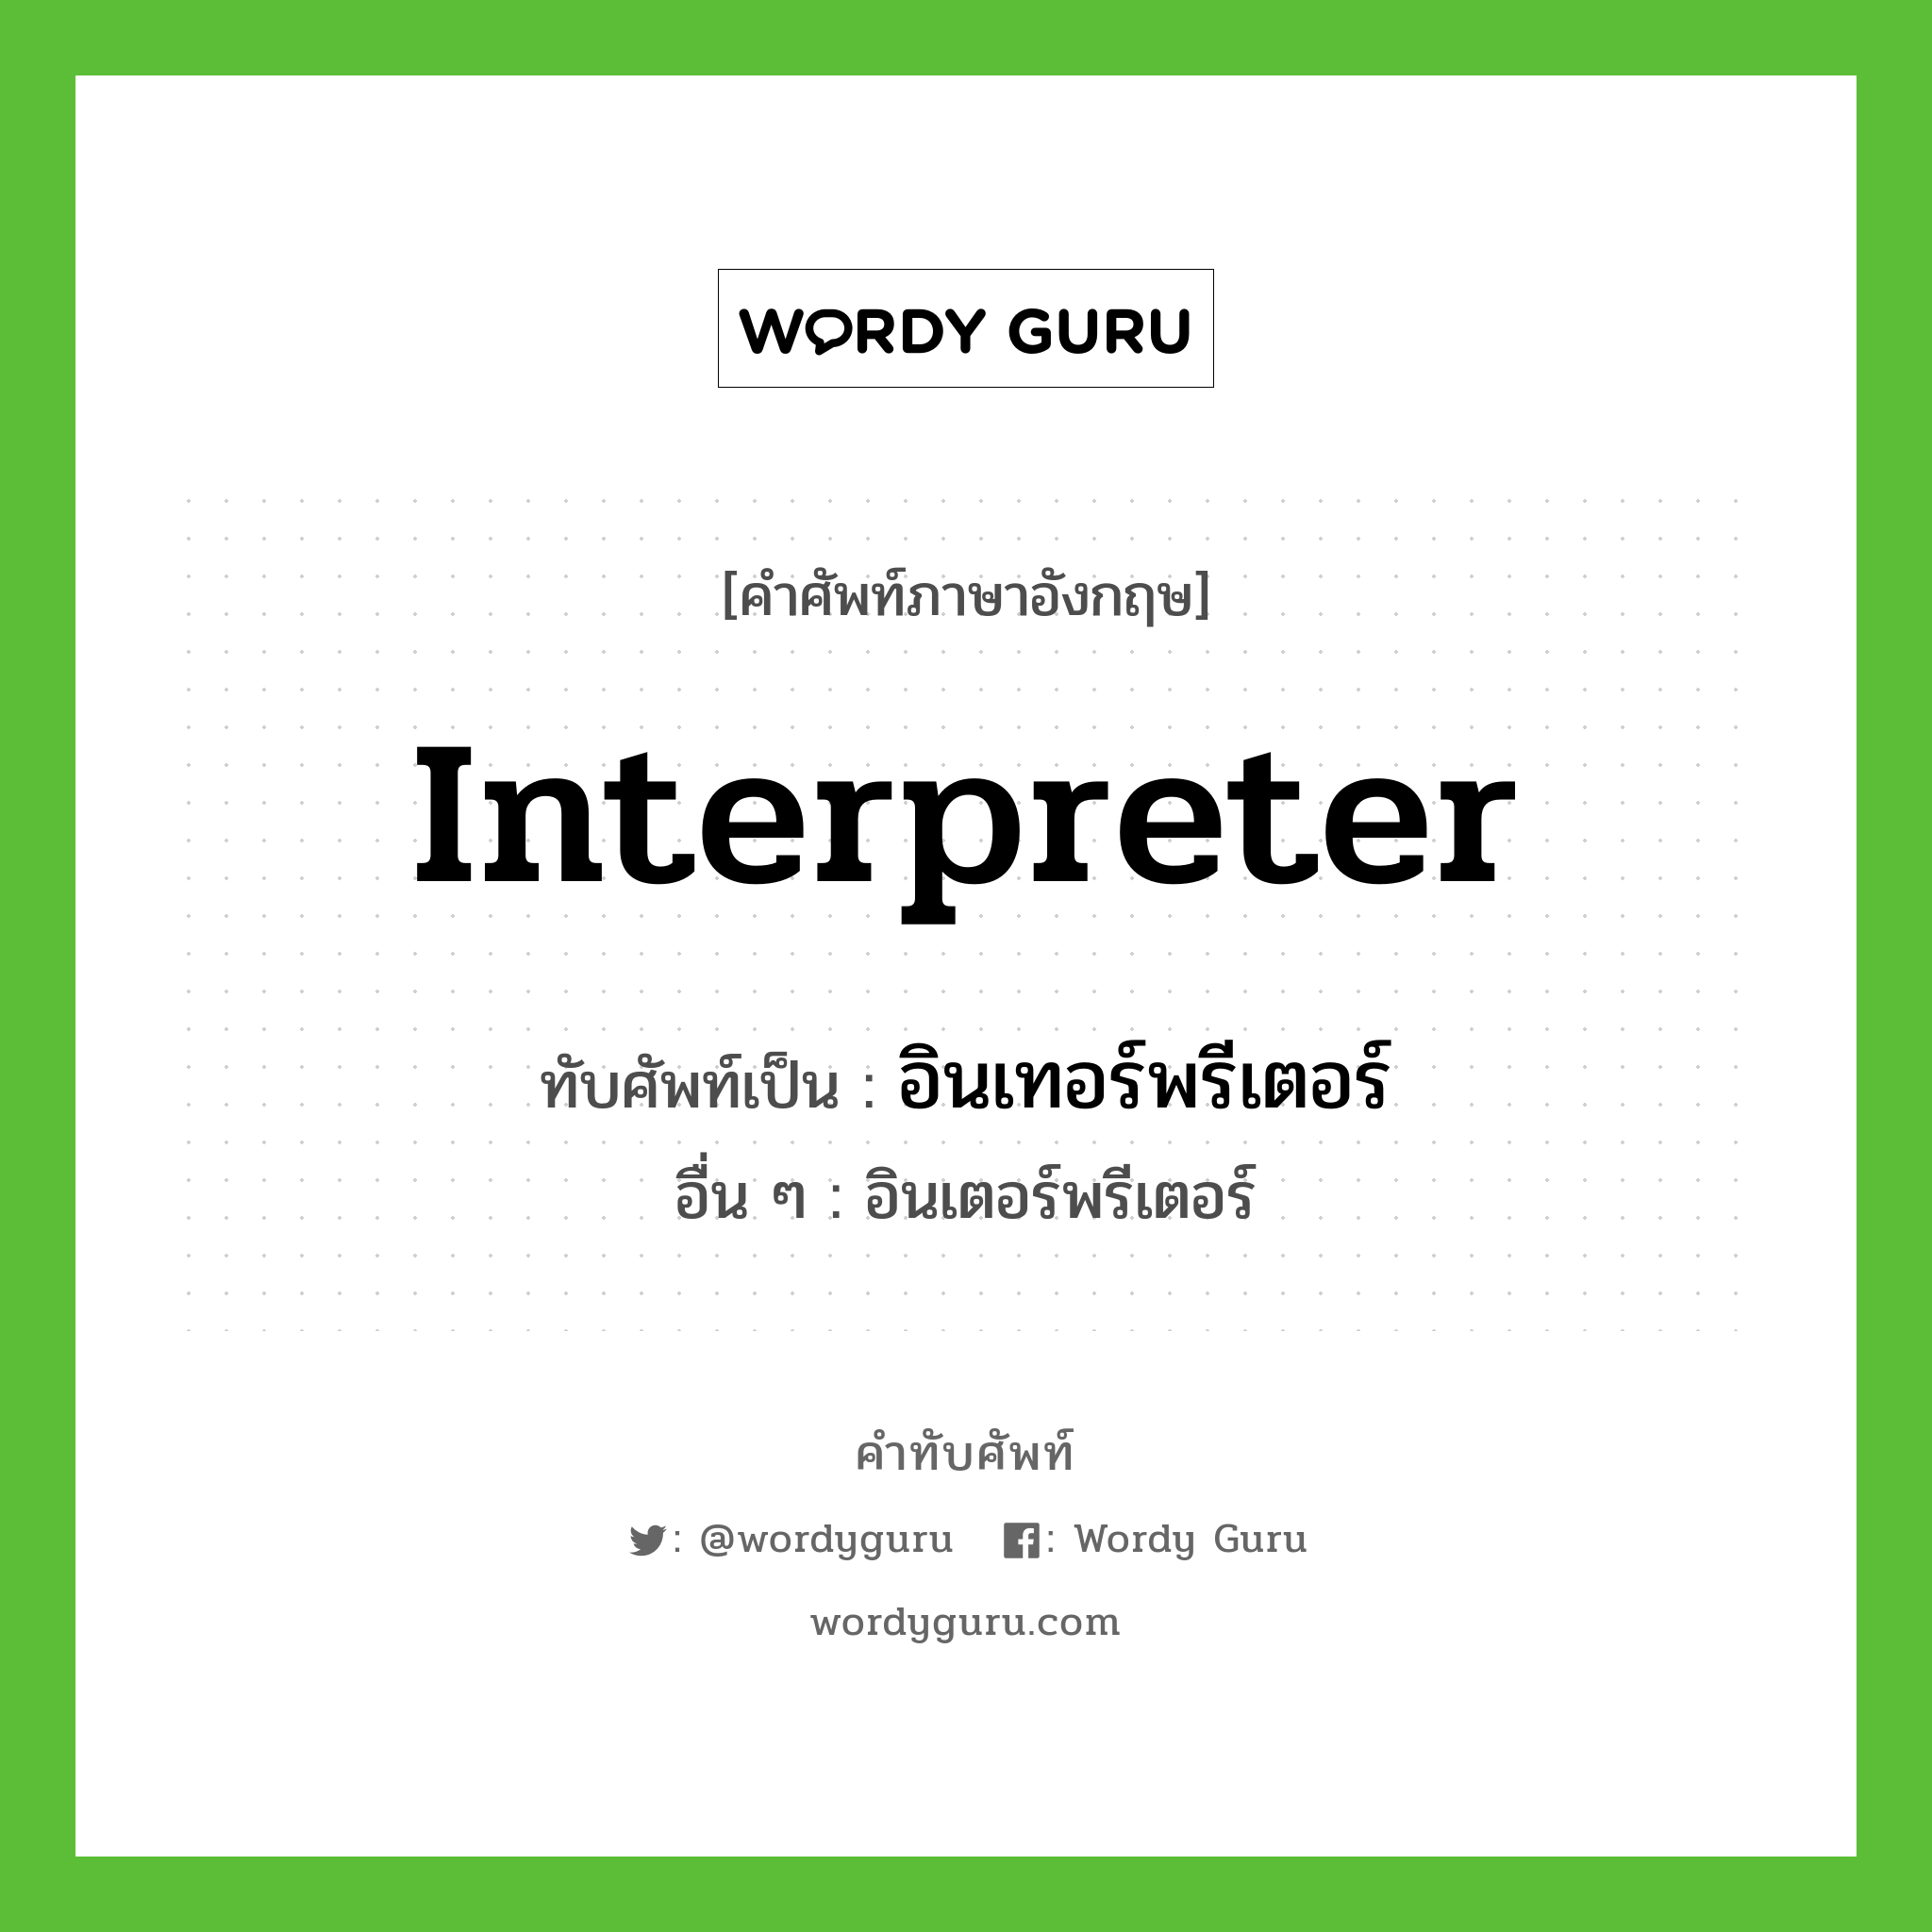 interpreter เขียนเป็นคำไทยว่าอะไร?, คำศัพท์ภาษาอังกฤษ interpreter ทับศัพท์เป็น อินเทอร์พรีเตอร์ อื่น ๆ อินเตอร์พรีเตอร์